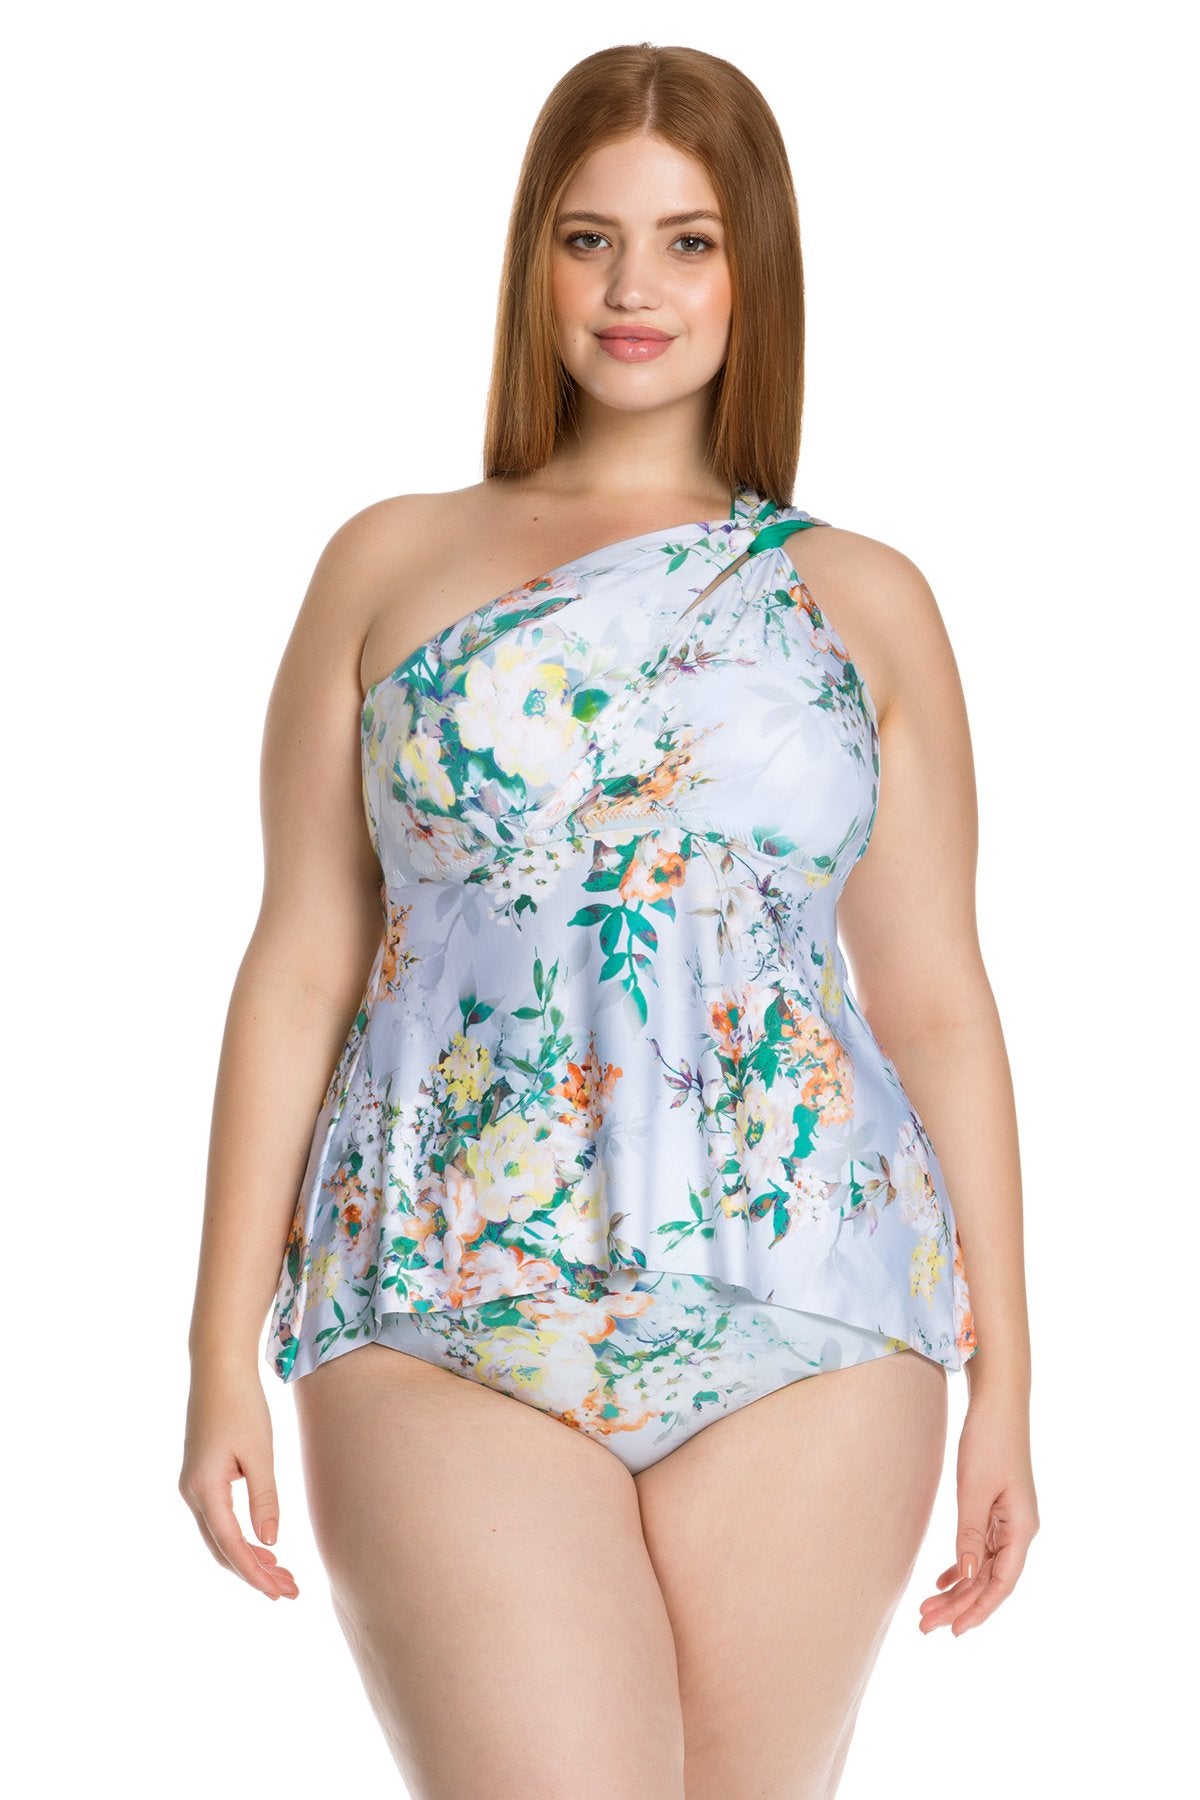 Femme Flora Tankini Top, Becca Etc - Iridescent Swimwear Boutique | Toronto, Canada